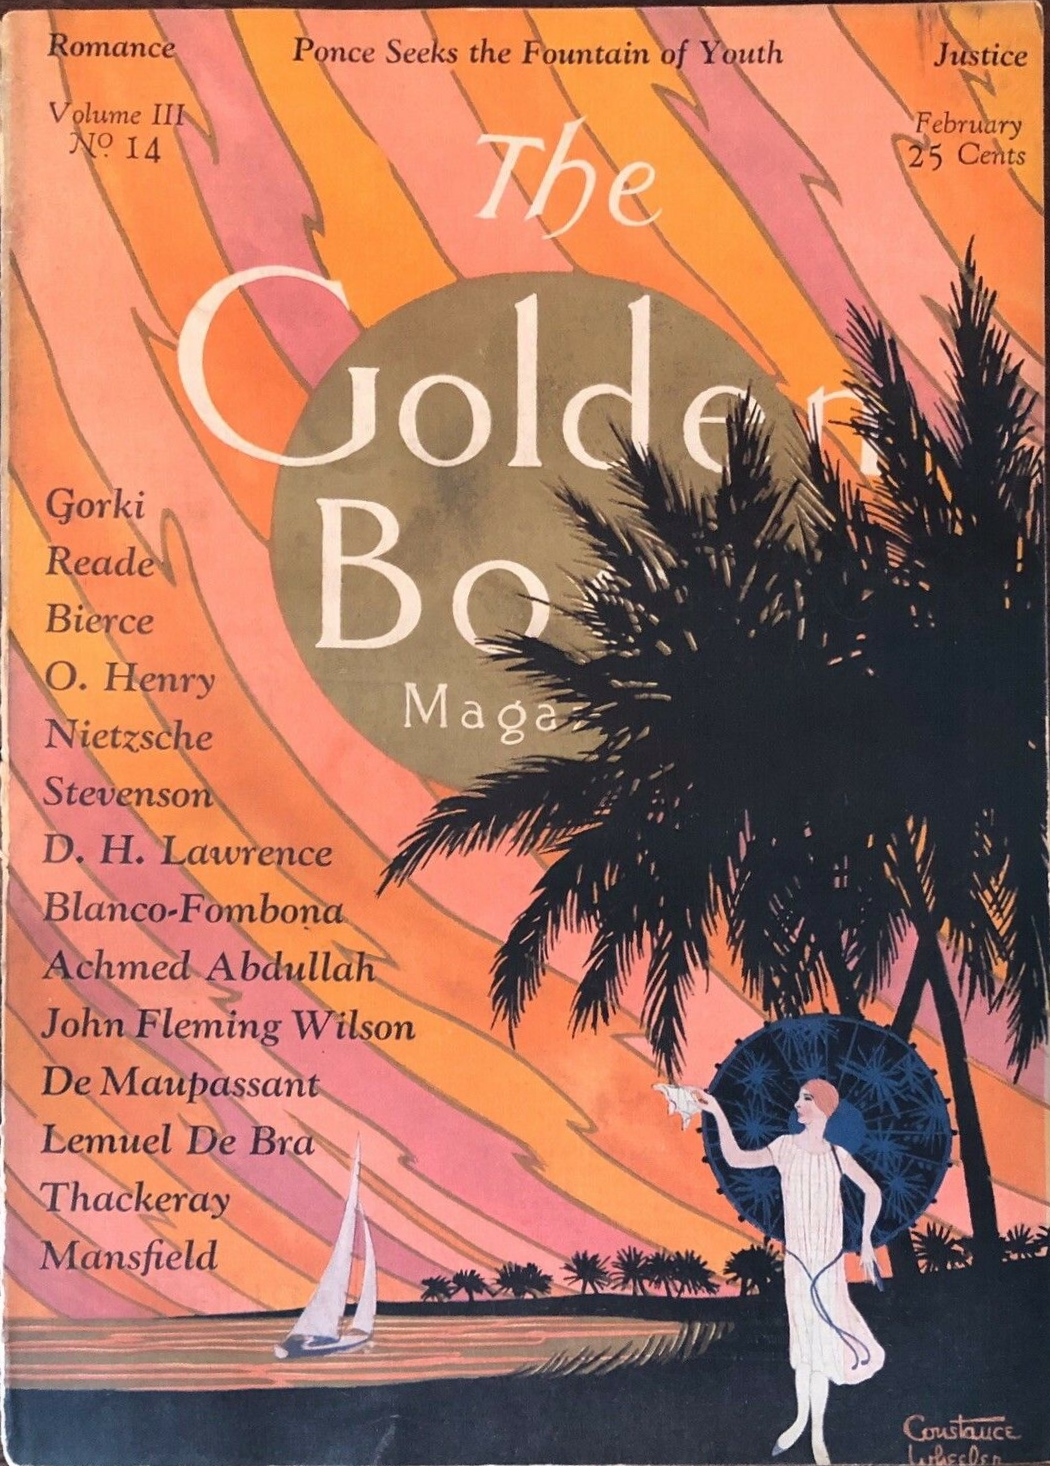 The Golden Book Magazine - February 1926